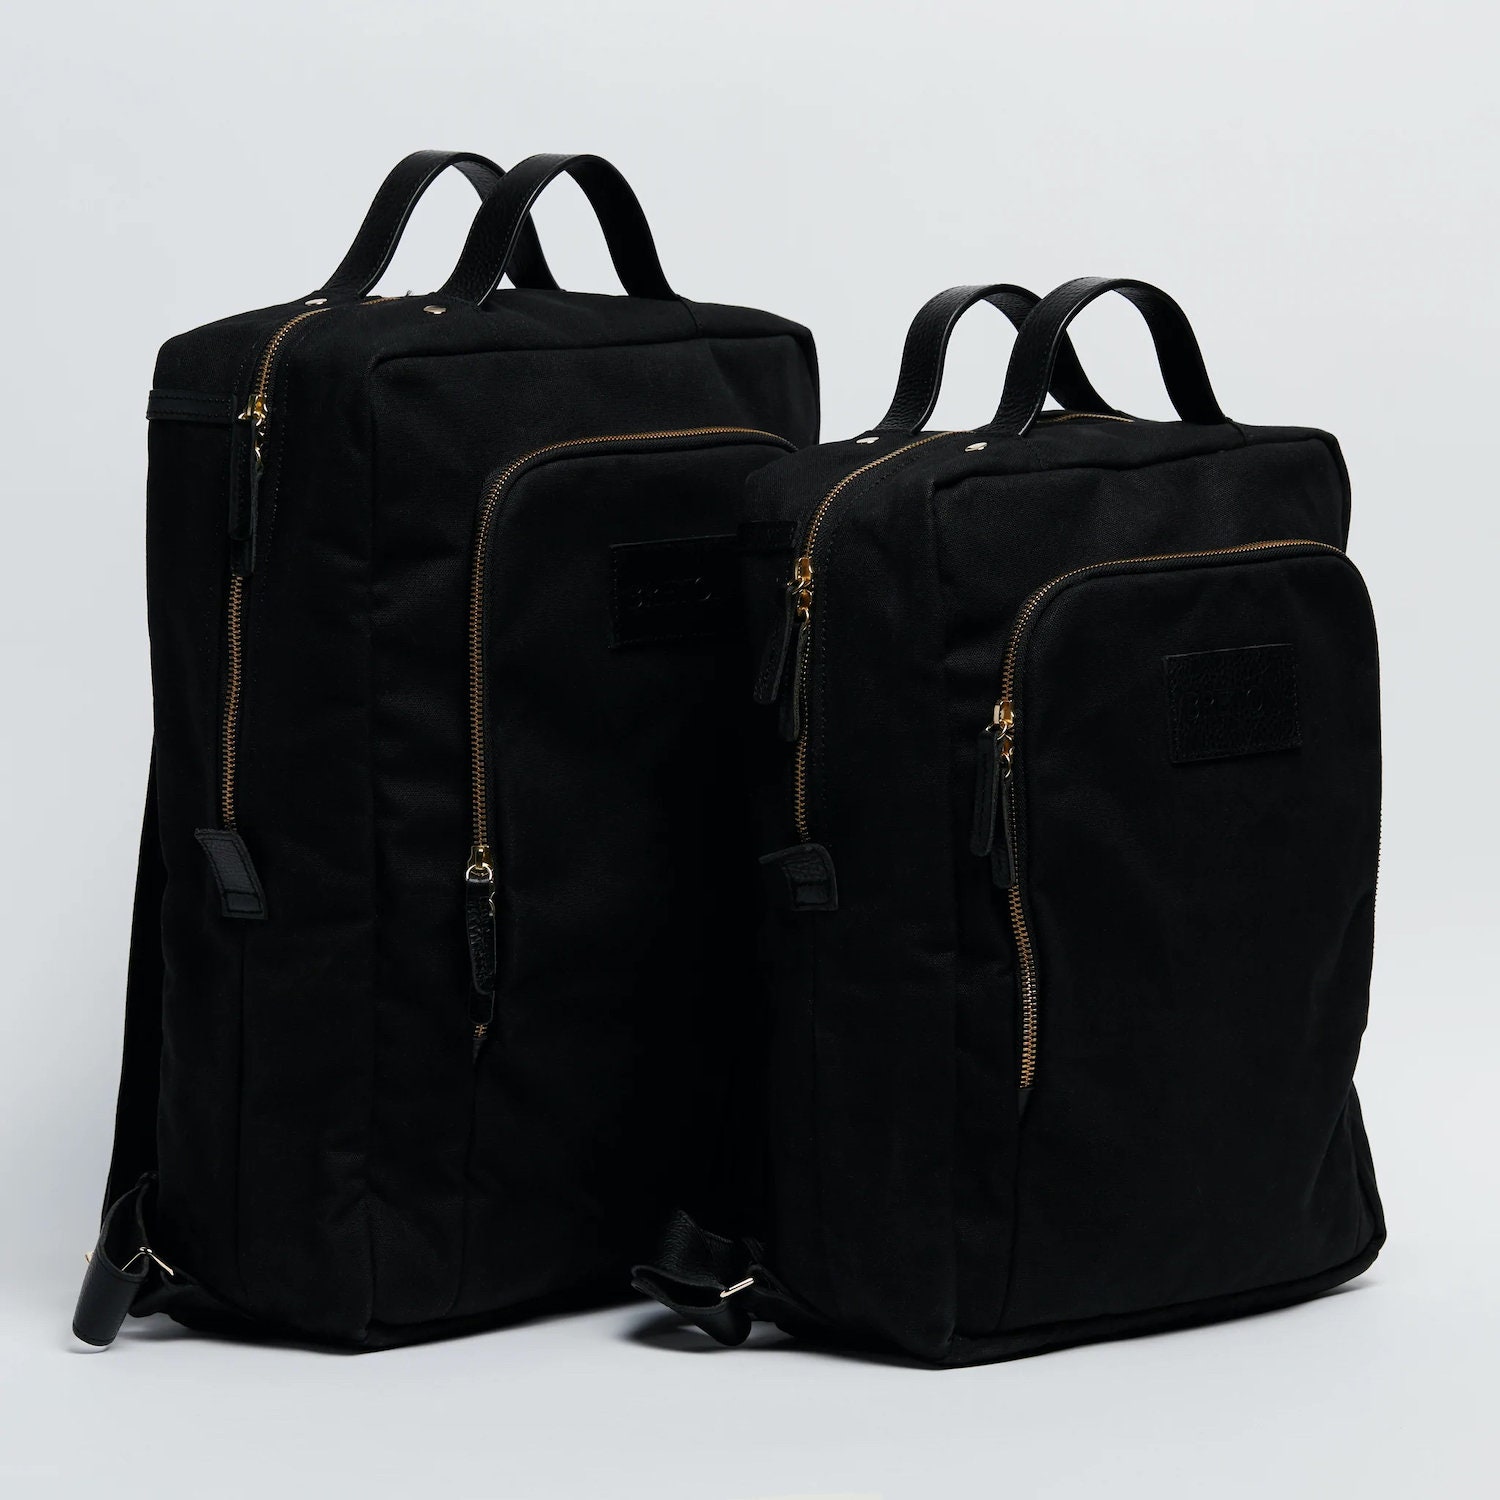 The Breton Company - Get this grey bag now on Kickstarter! #crowdfunding  #kickstarter #entrepreneur #backpack #moderndaybriefcase | Facebook